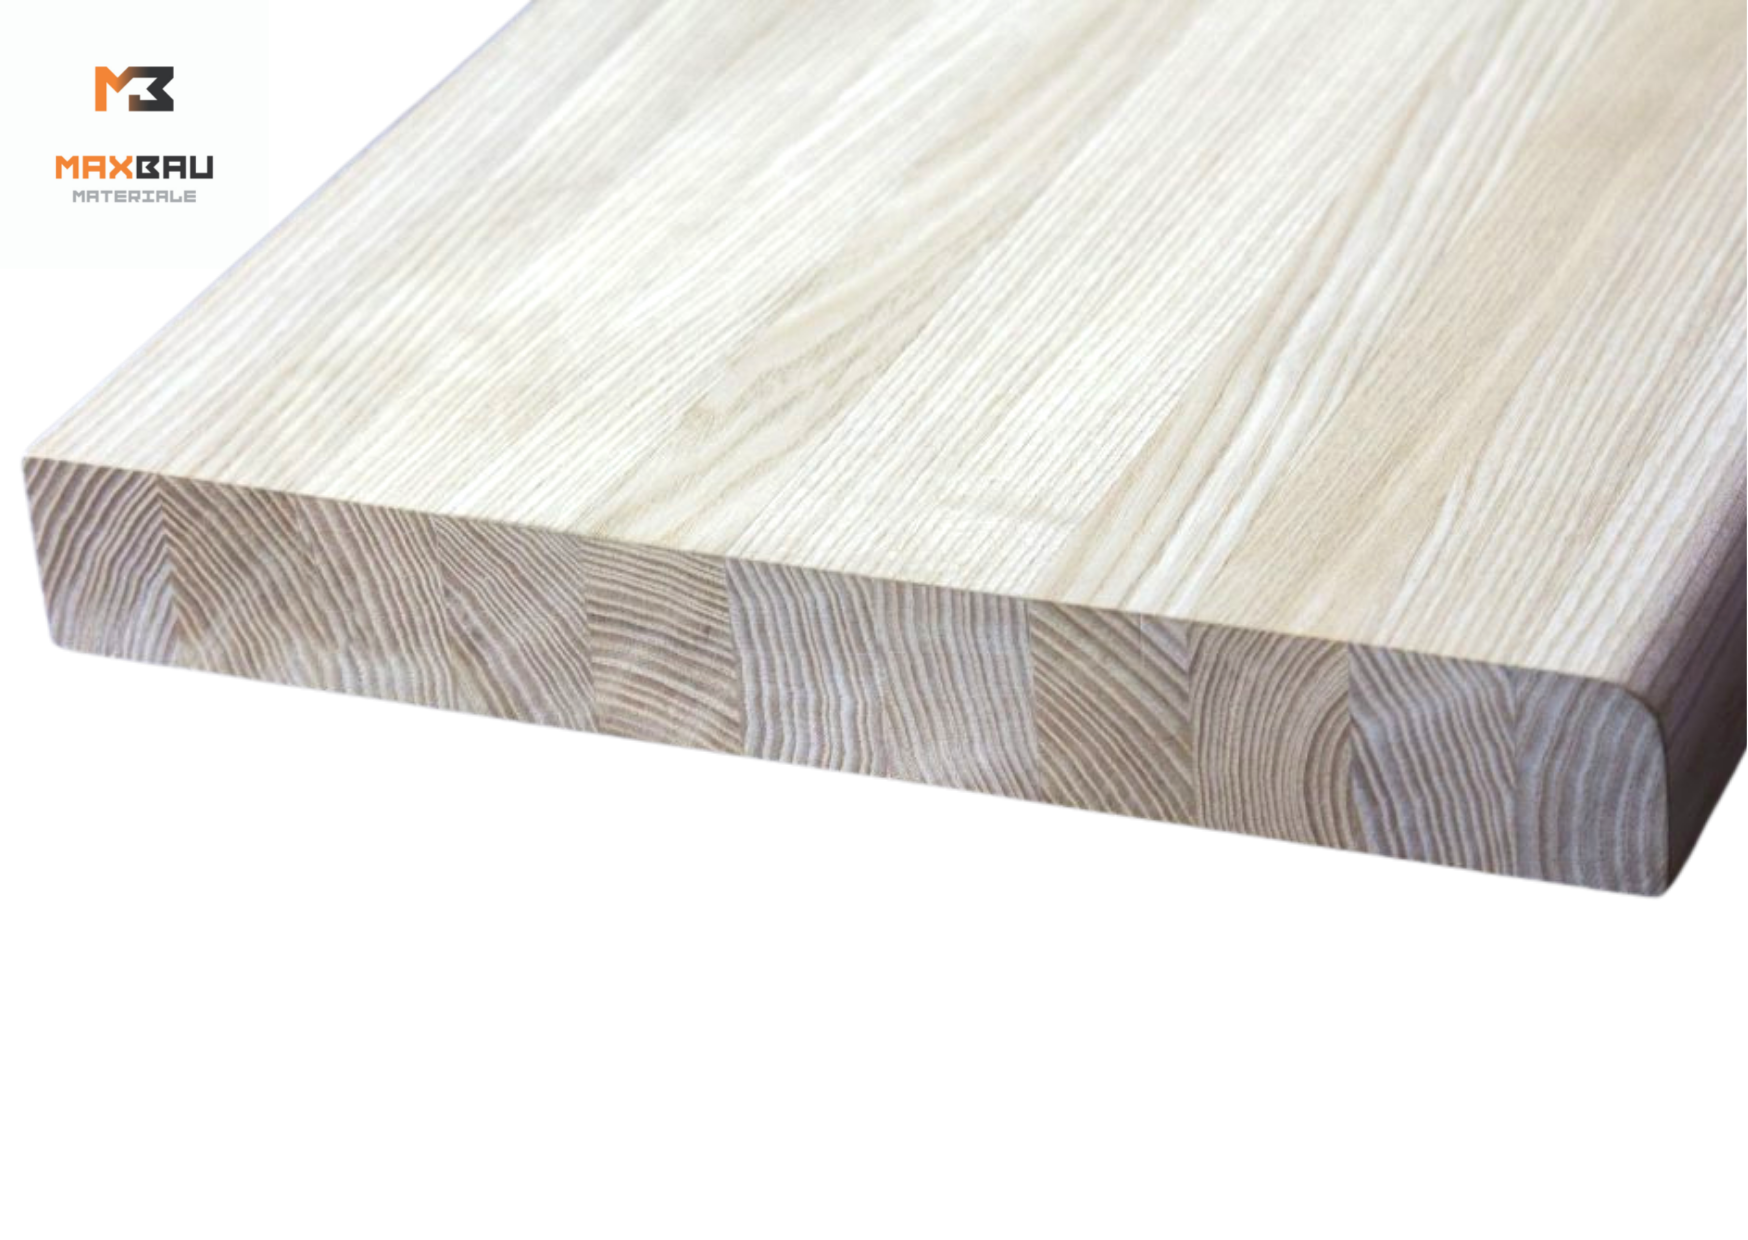 Placi din lemn incleiat - Placa de lemn incleiat MaxBau 2500 x 300 x 28 mm Clasa AB, https:maxbau.ro